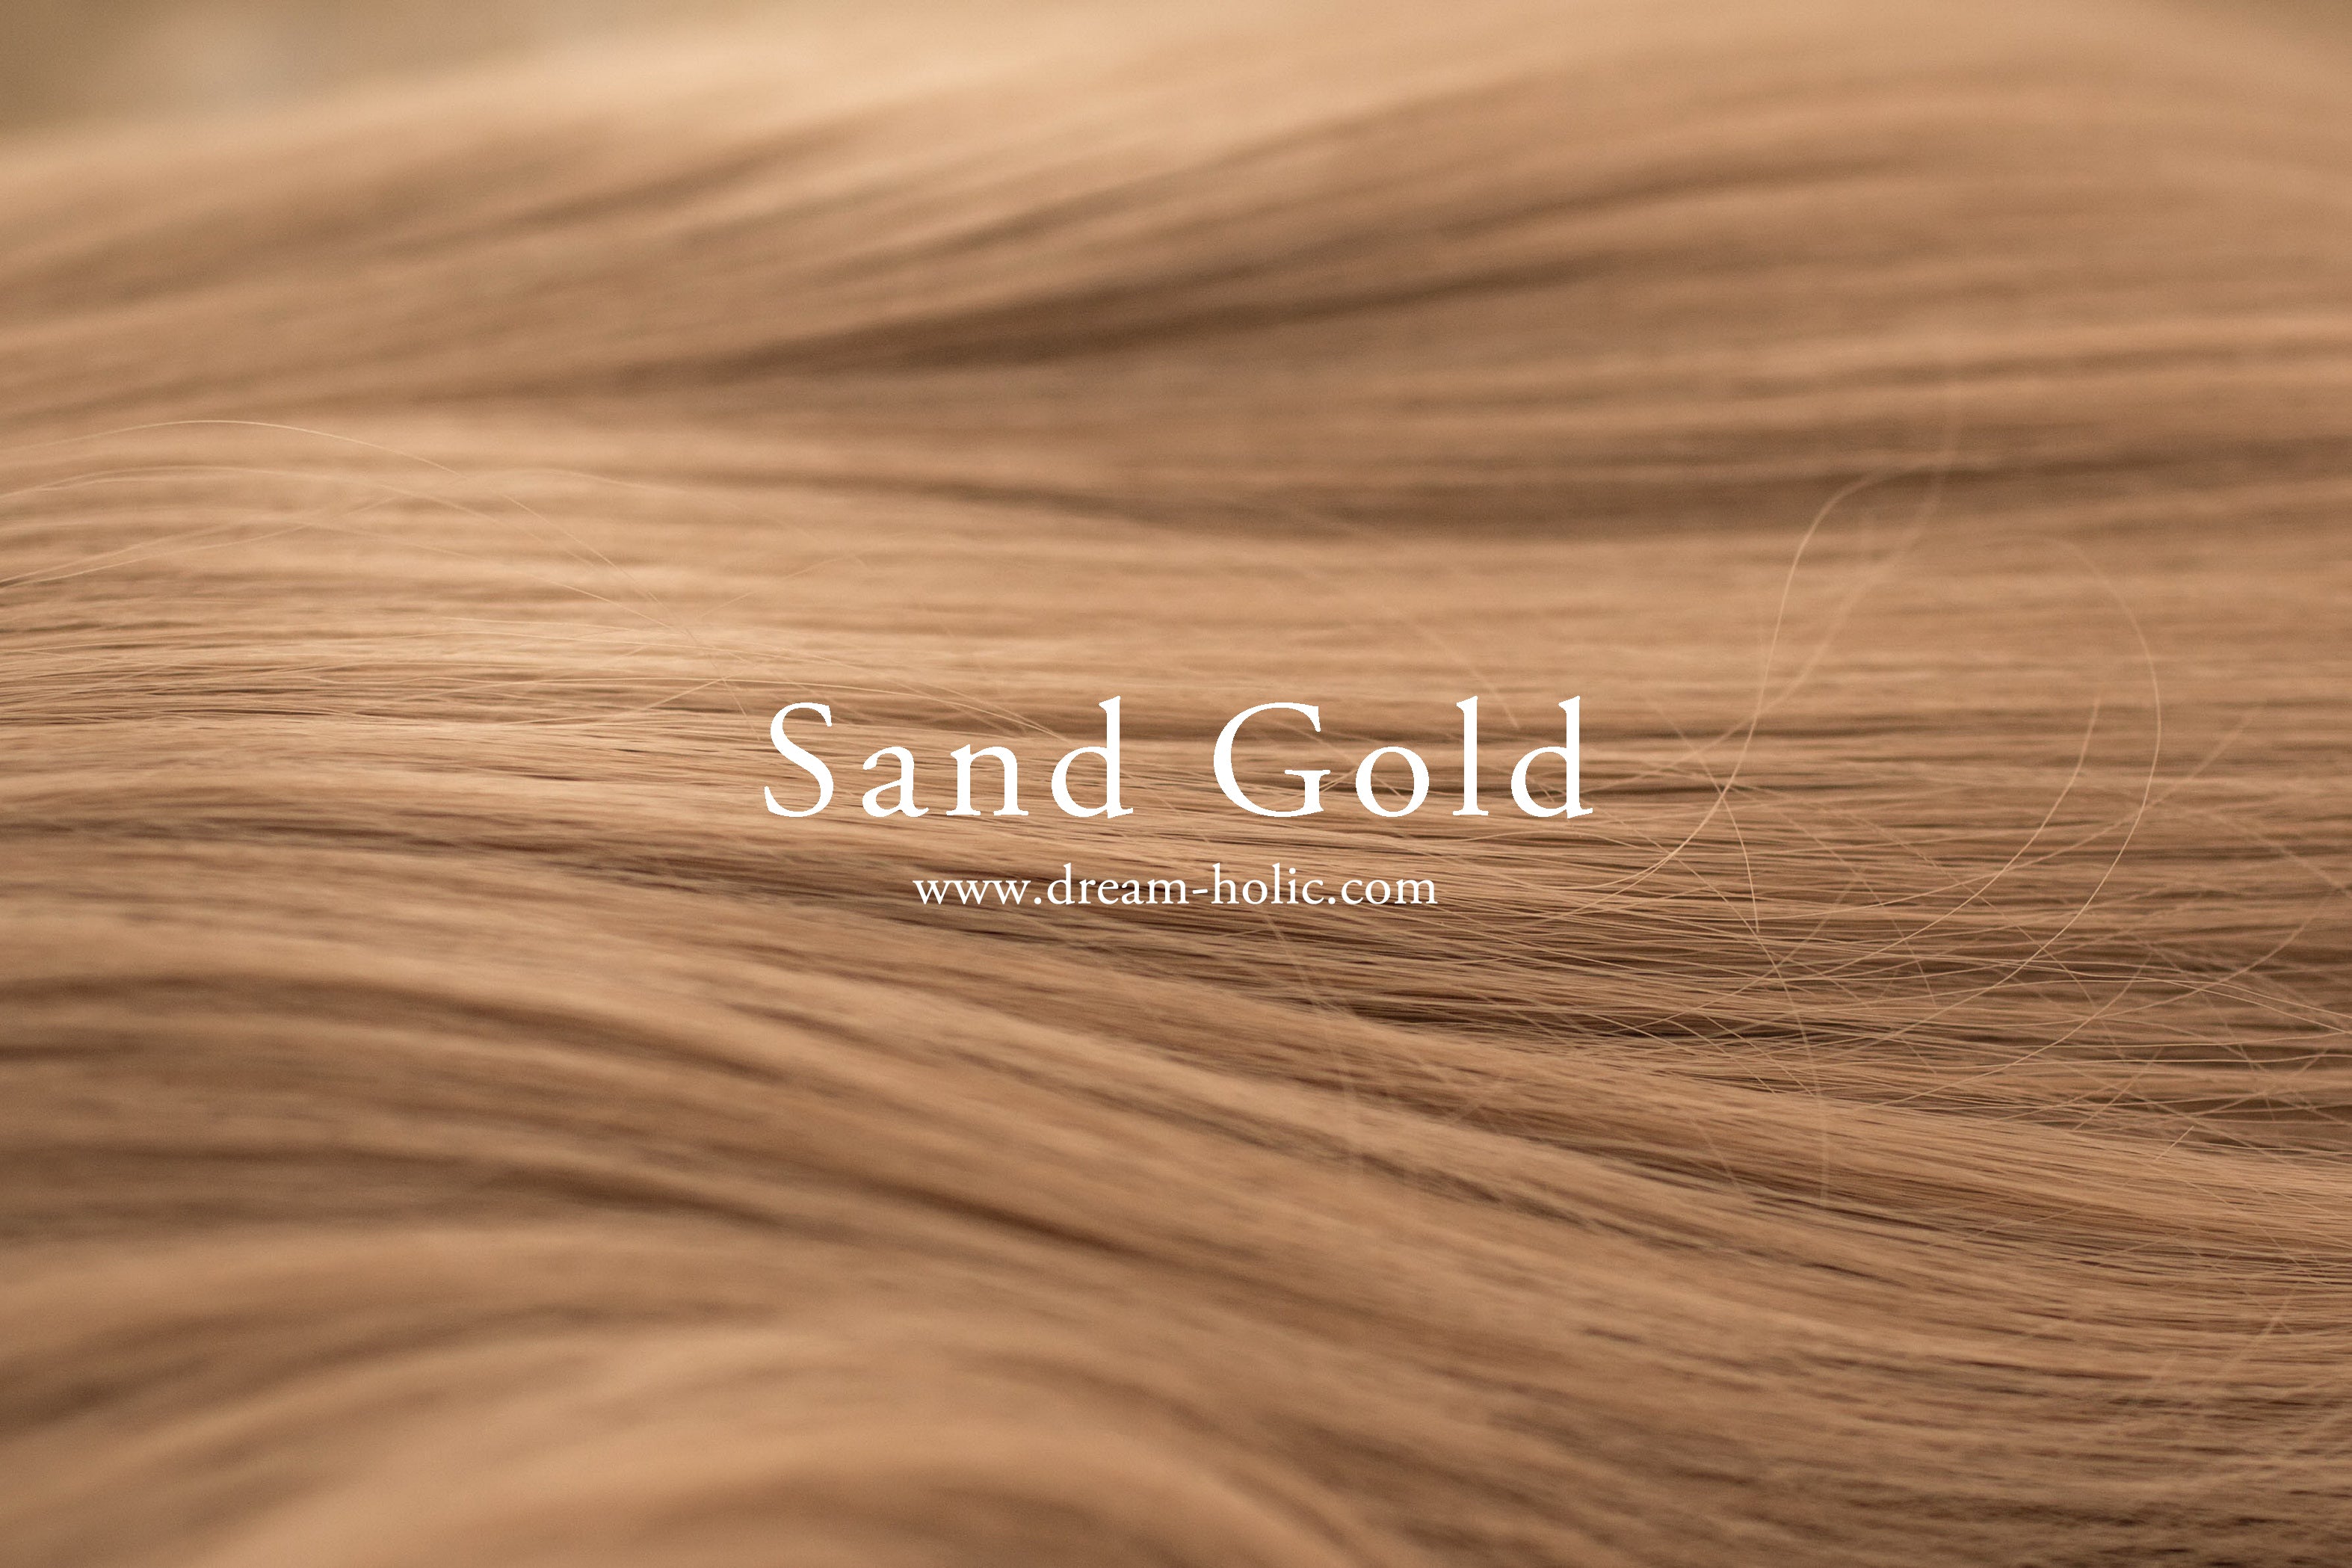 Sand Gold